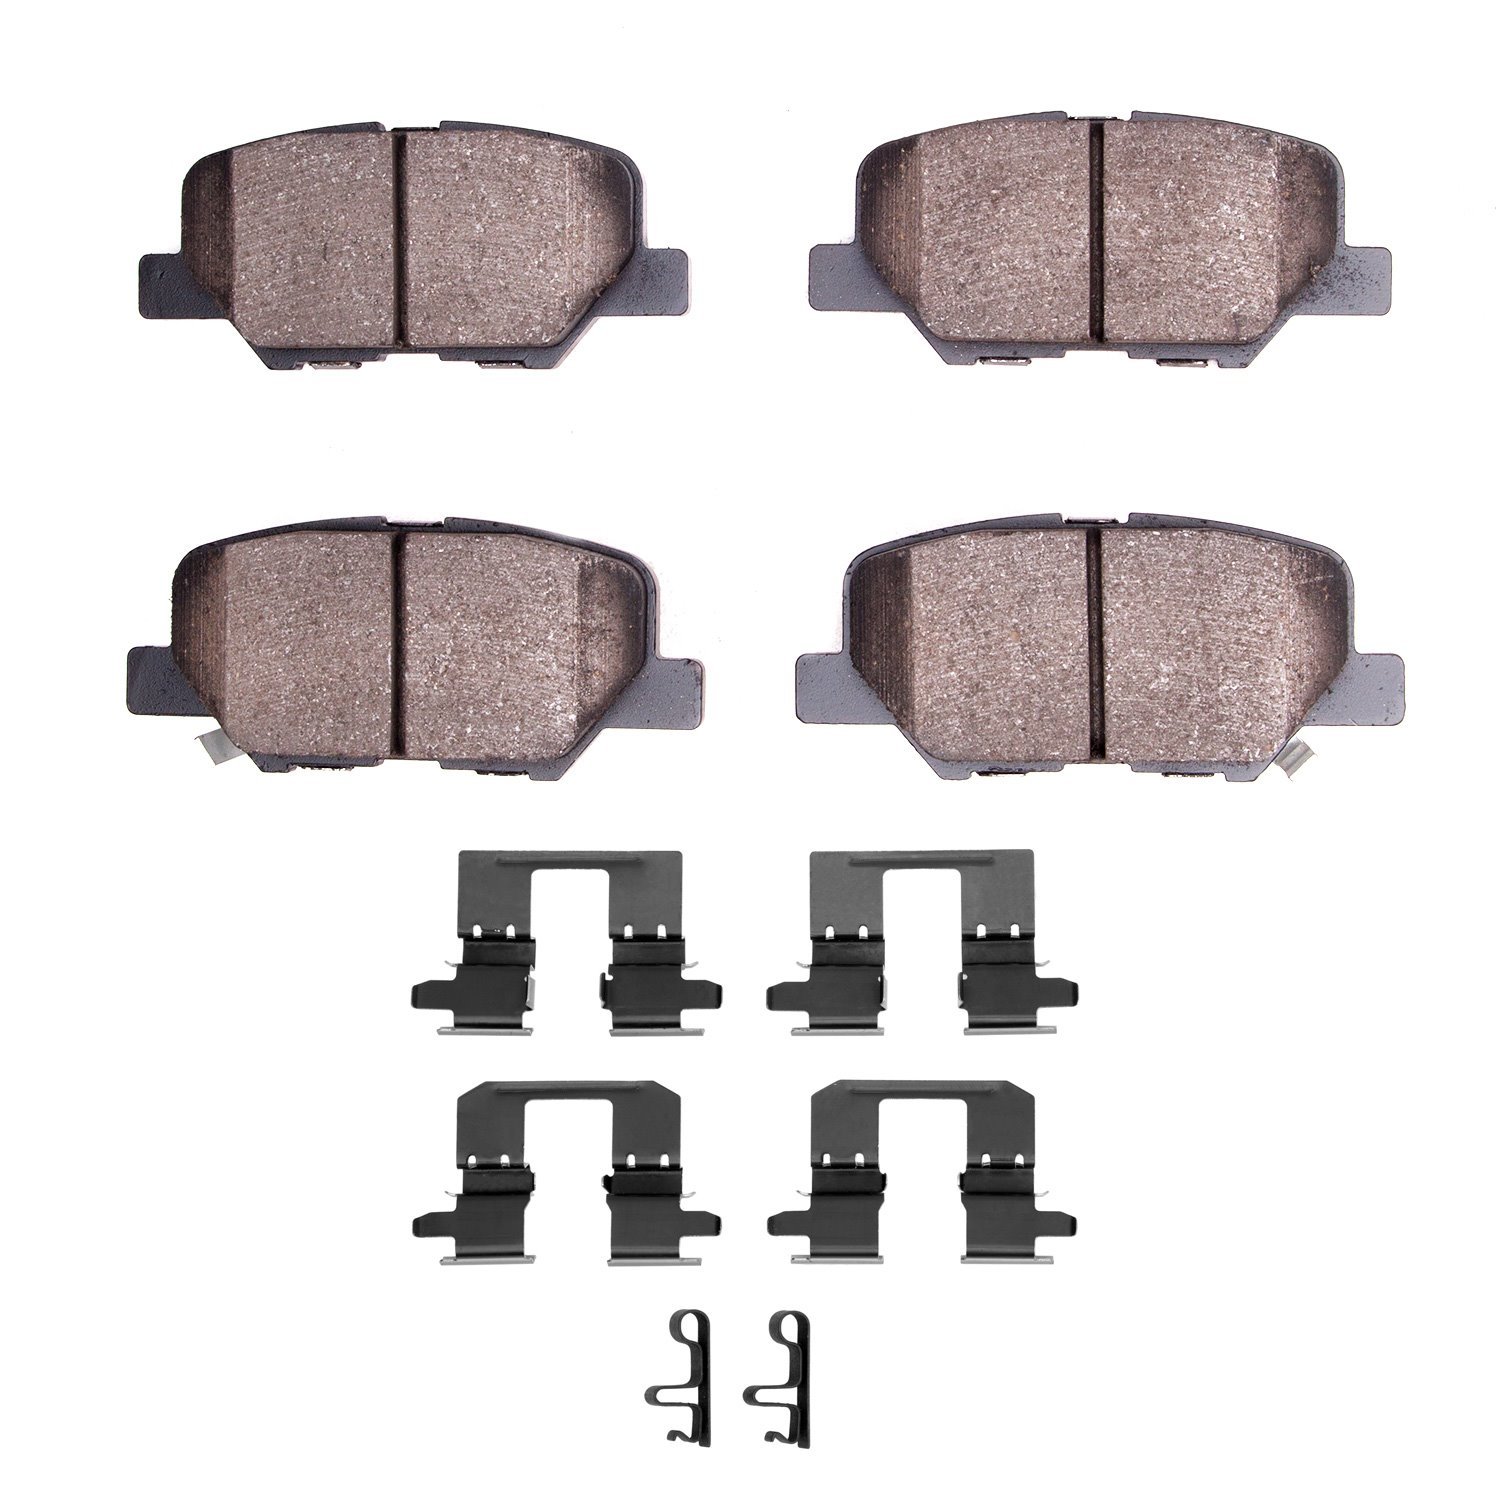 1551-1679-01 5000 Advanced Ceramic Brake Pads & Hardware Kit, Fits Select Multiple Makes/Models, Position: Rear